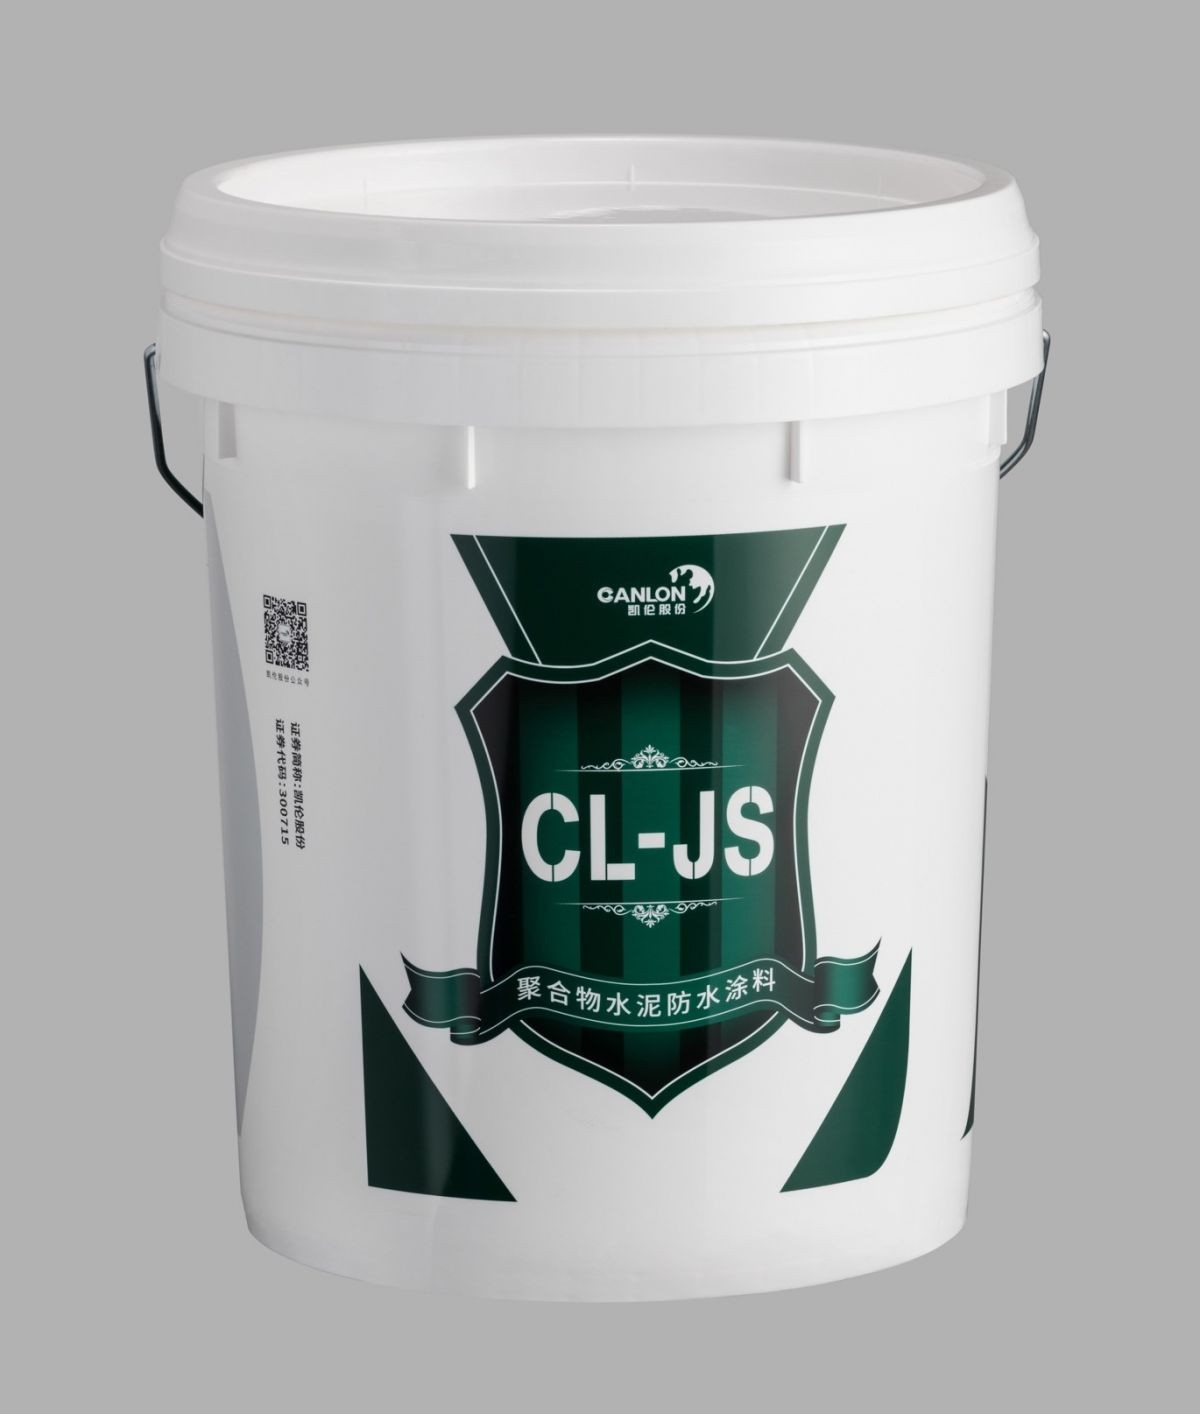 CL-JS聚合物水泥防水涂料